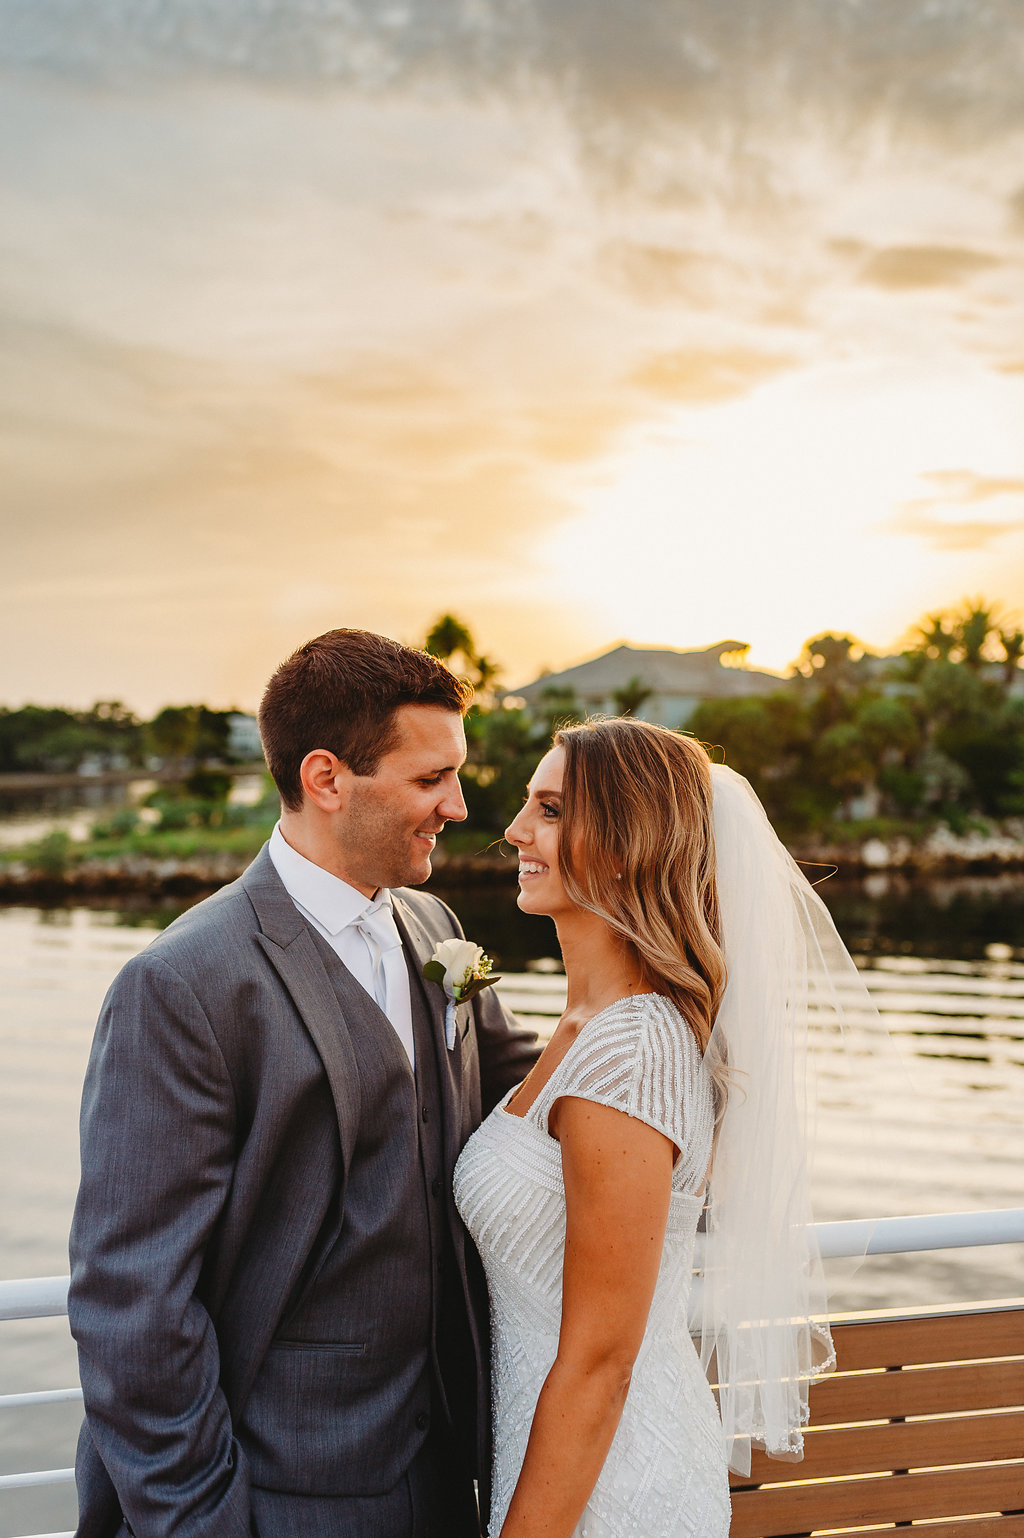 Florida Bride and Groom Sunset Wedding Portrait | Tampa Waterfront Wedding Venue Yacht Starship IV